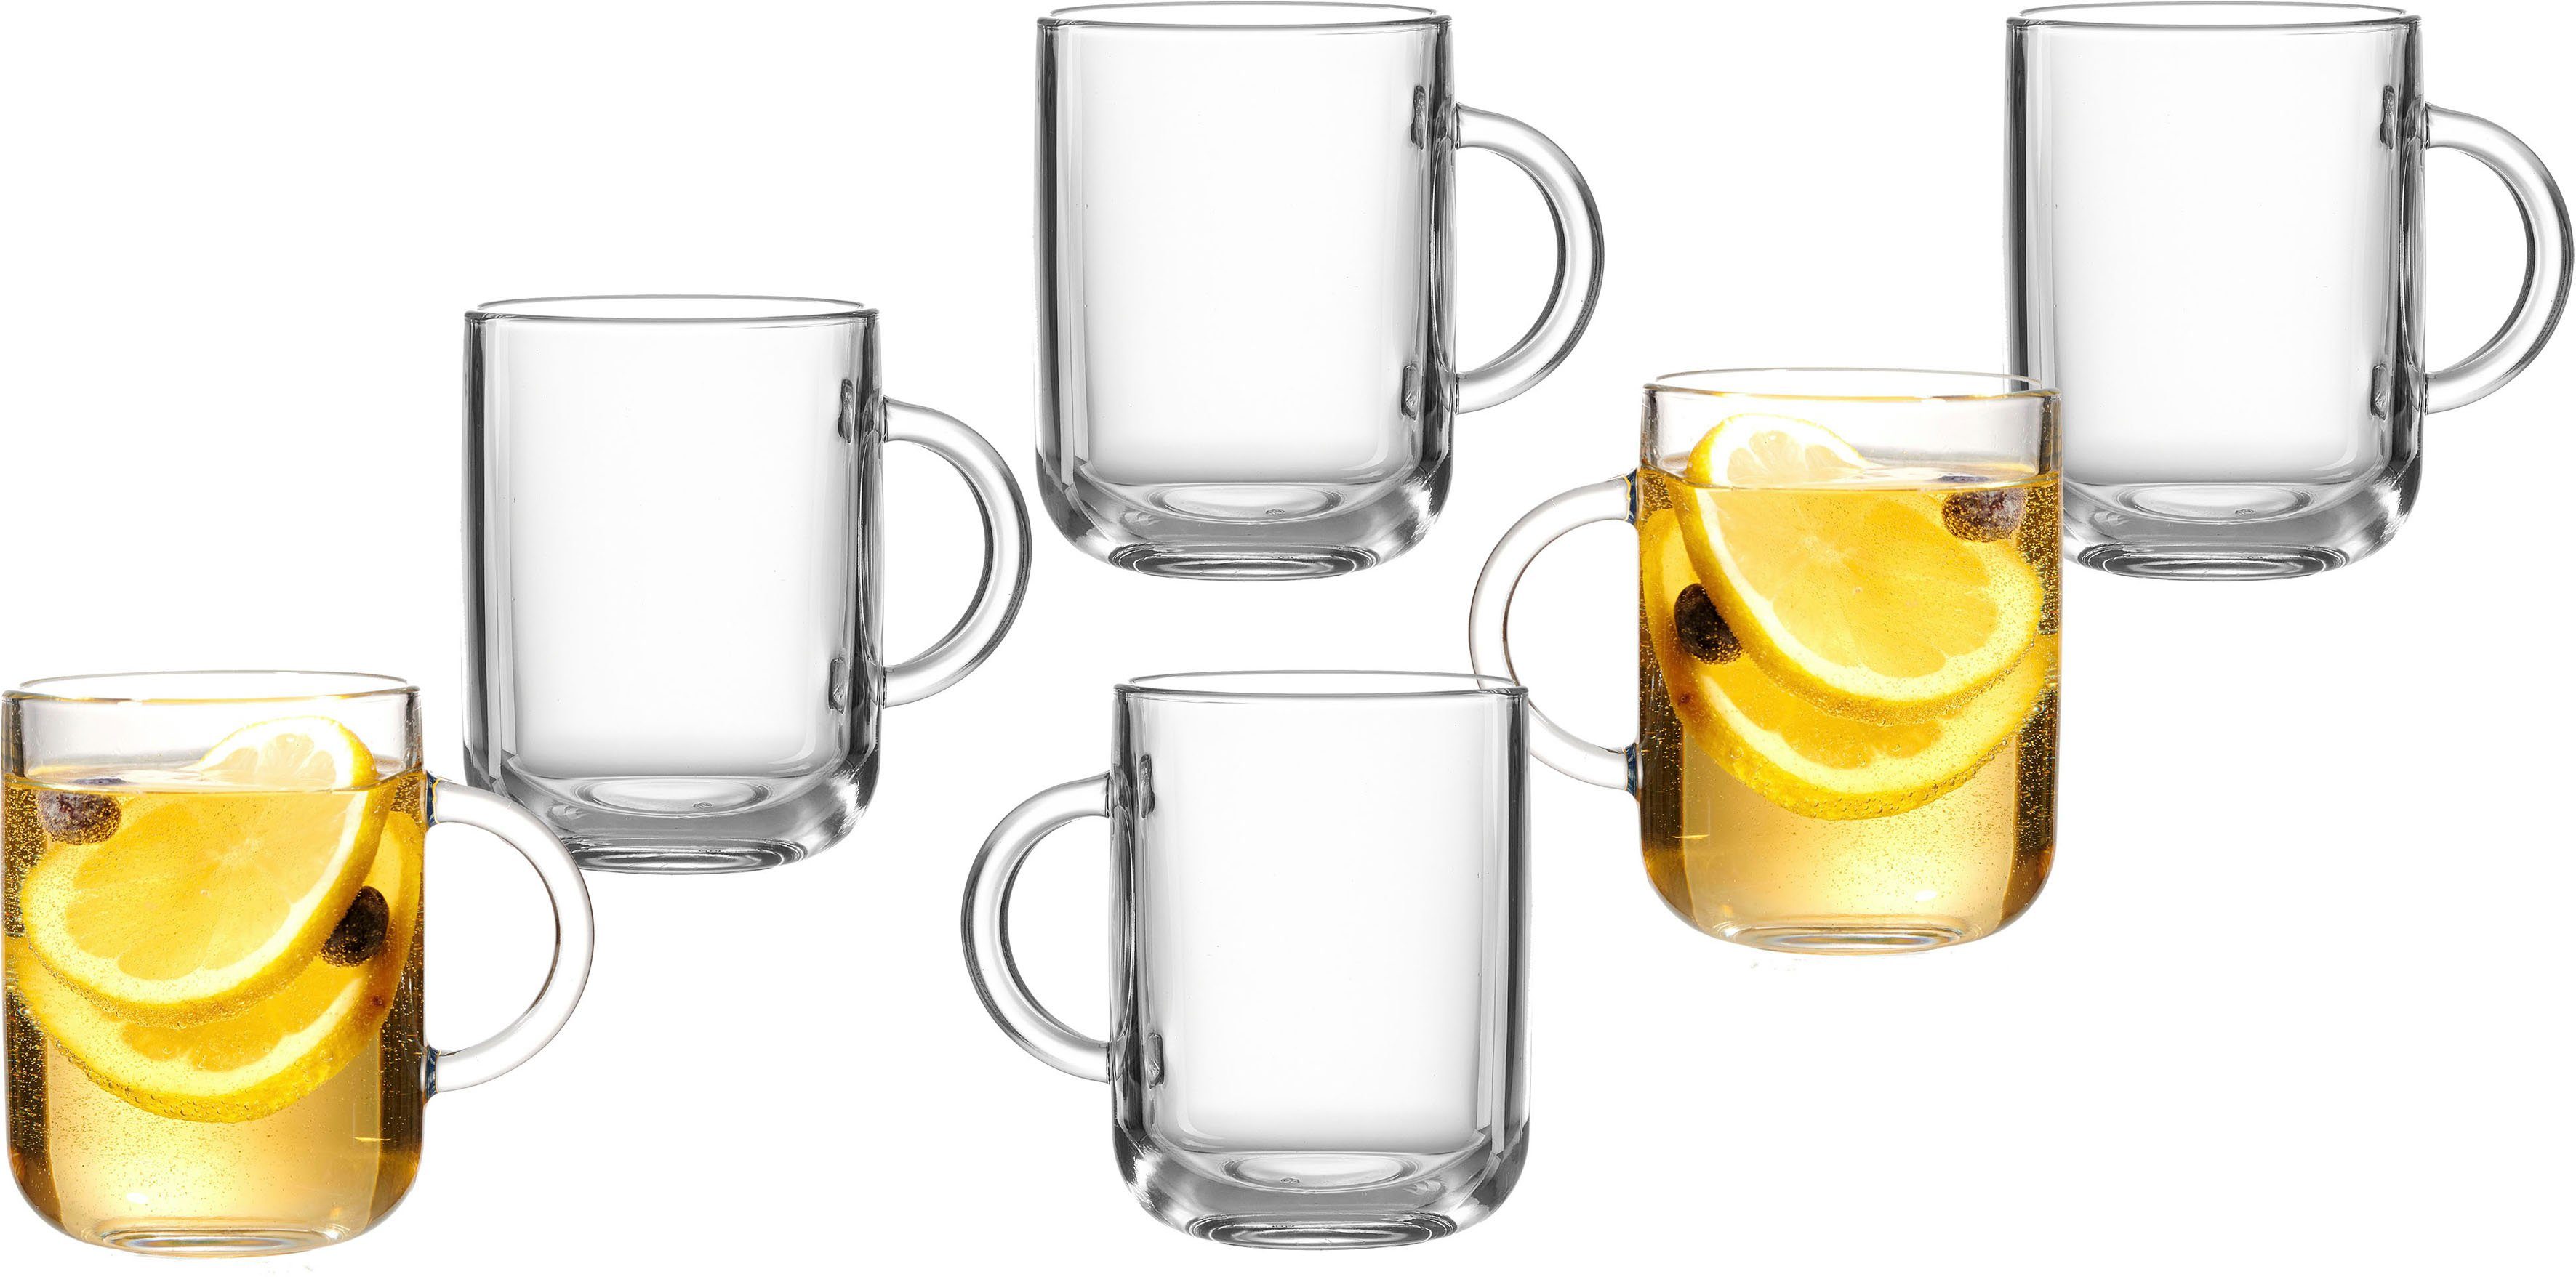 Ritzenhoff & Breker Teeglas Glühwein- /Teeglas-Set Marco, Glas, 6-teilig, 330 ml